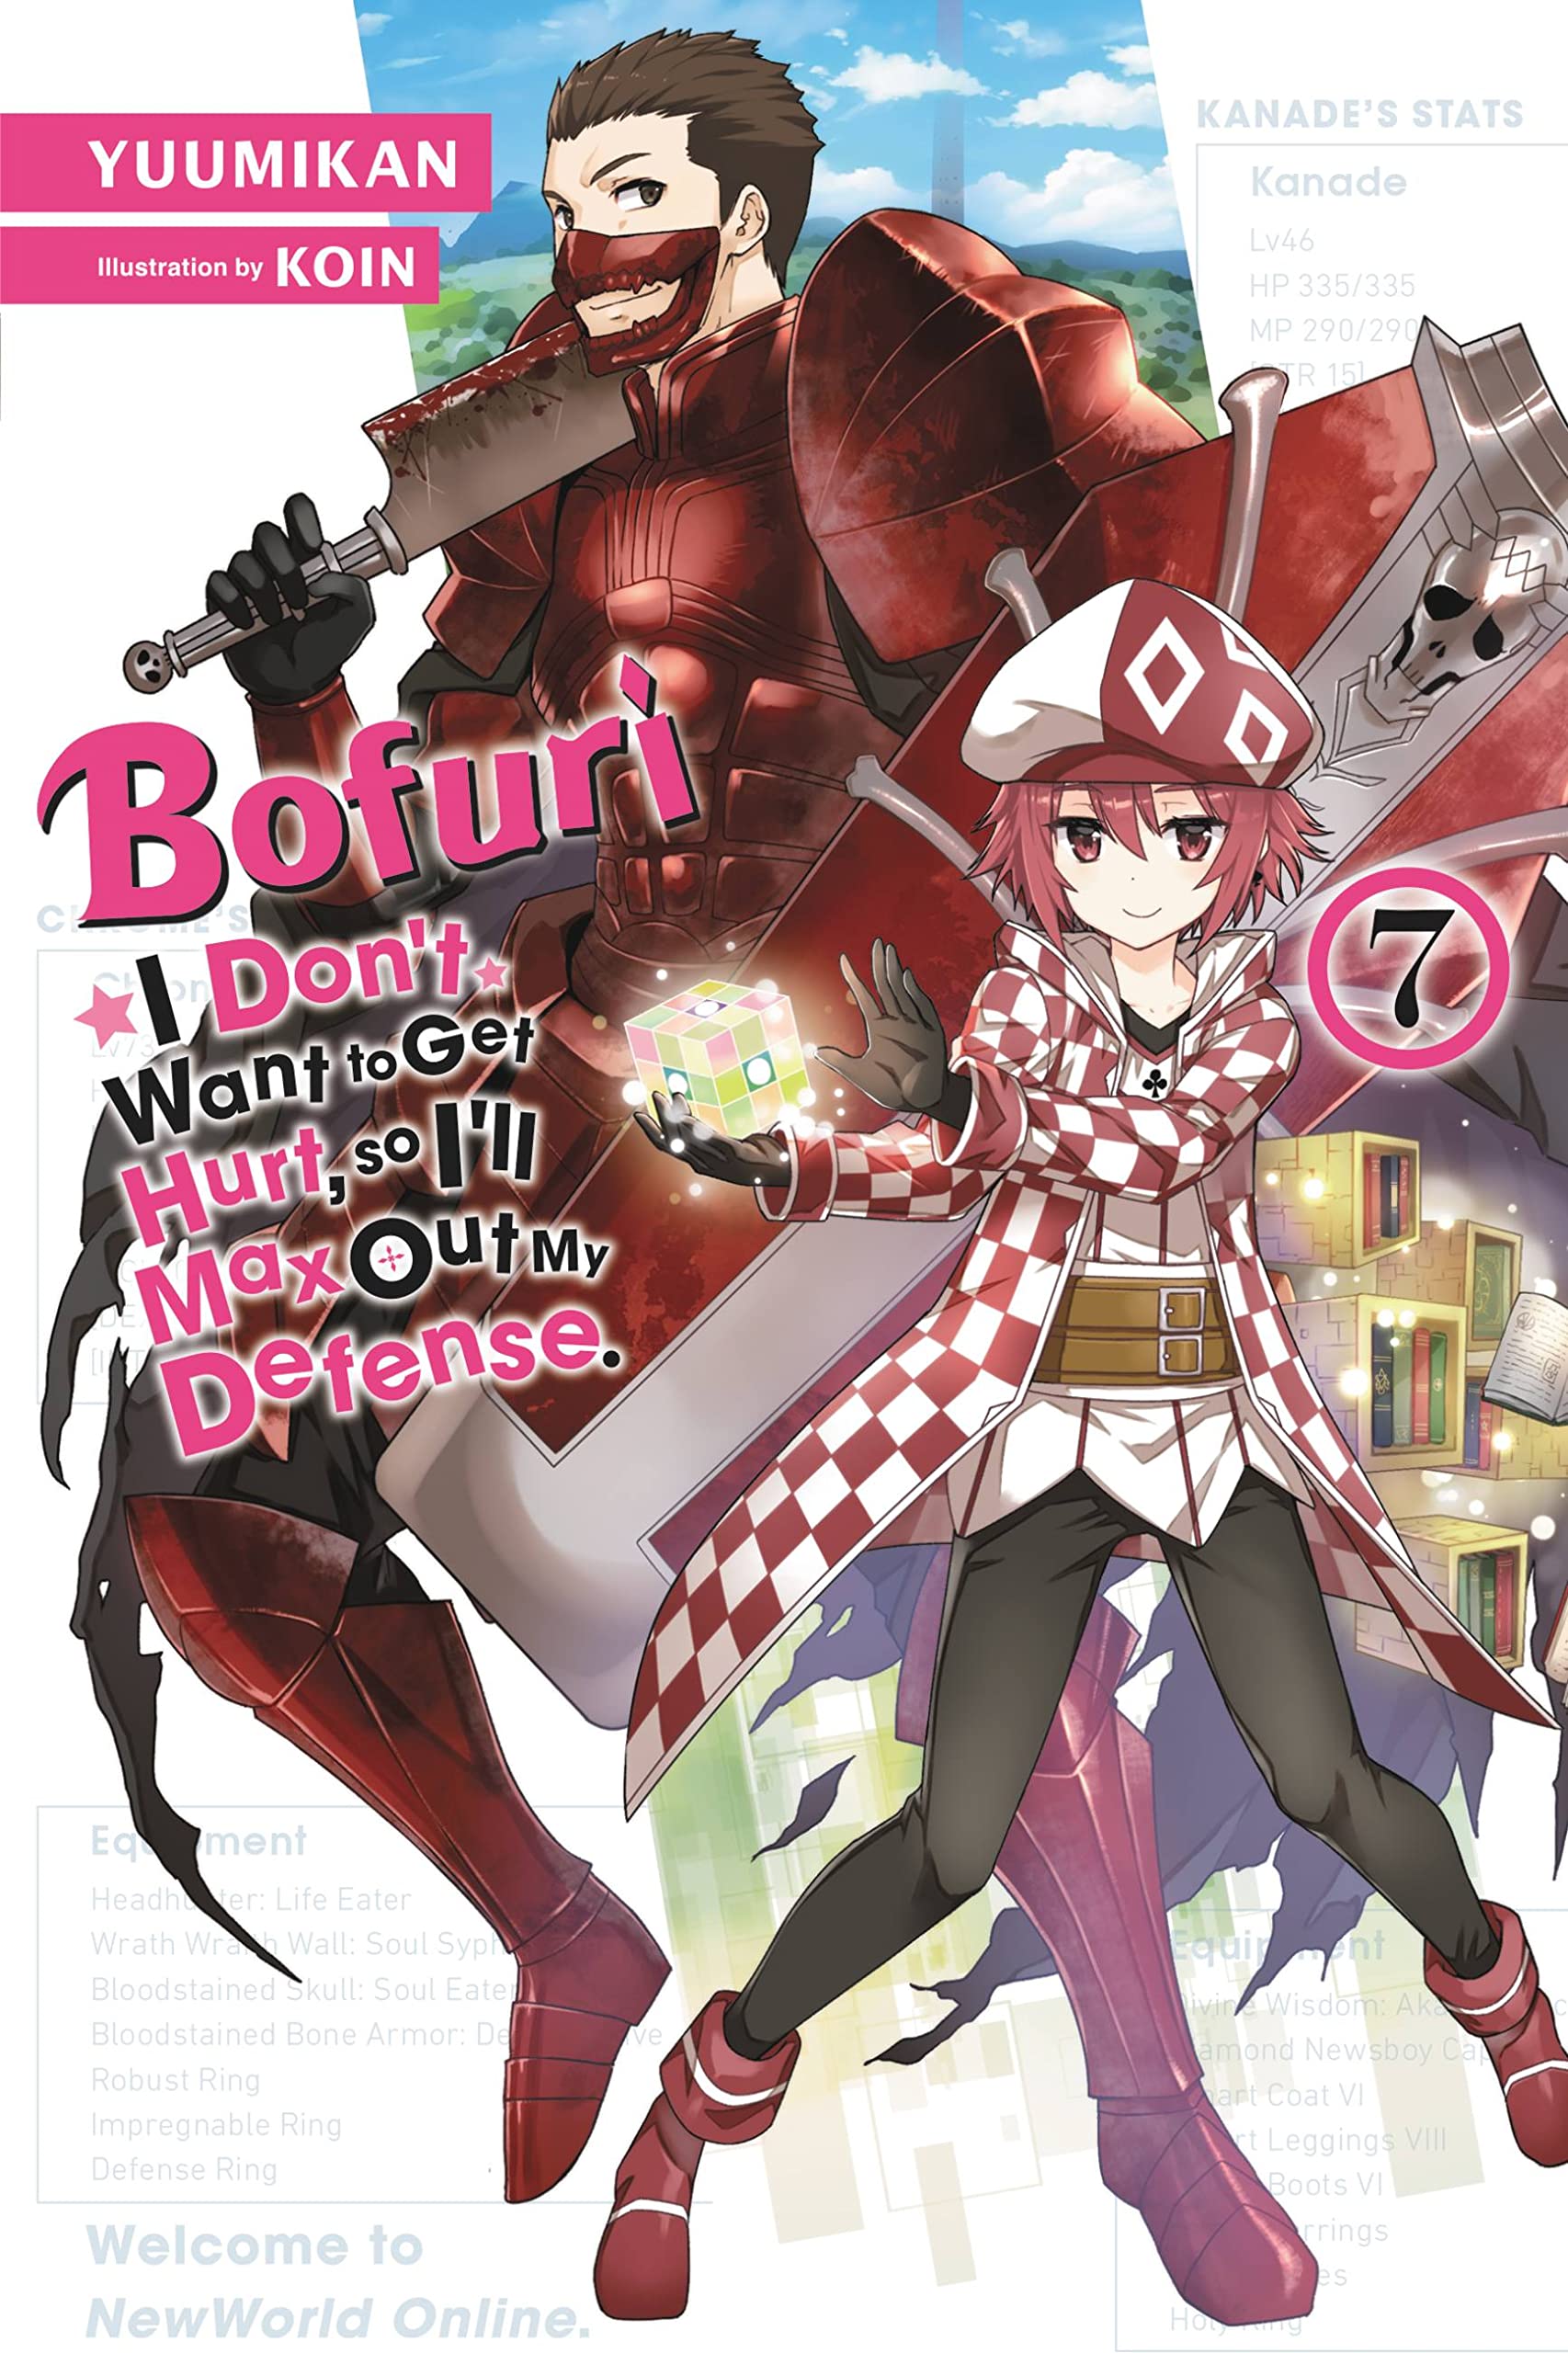 Bofuri: I Don't Want to Get Hurt, So I'll Max Out My Defense. Vol. 07 (Light Novel)